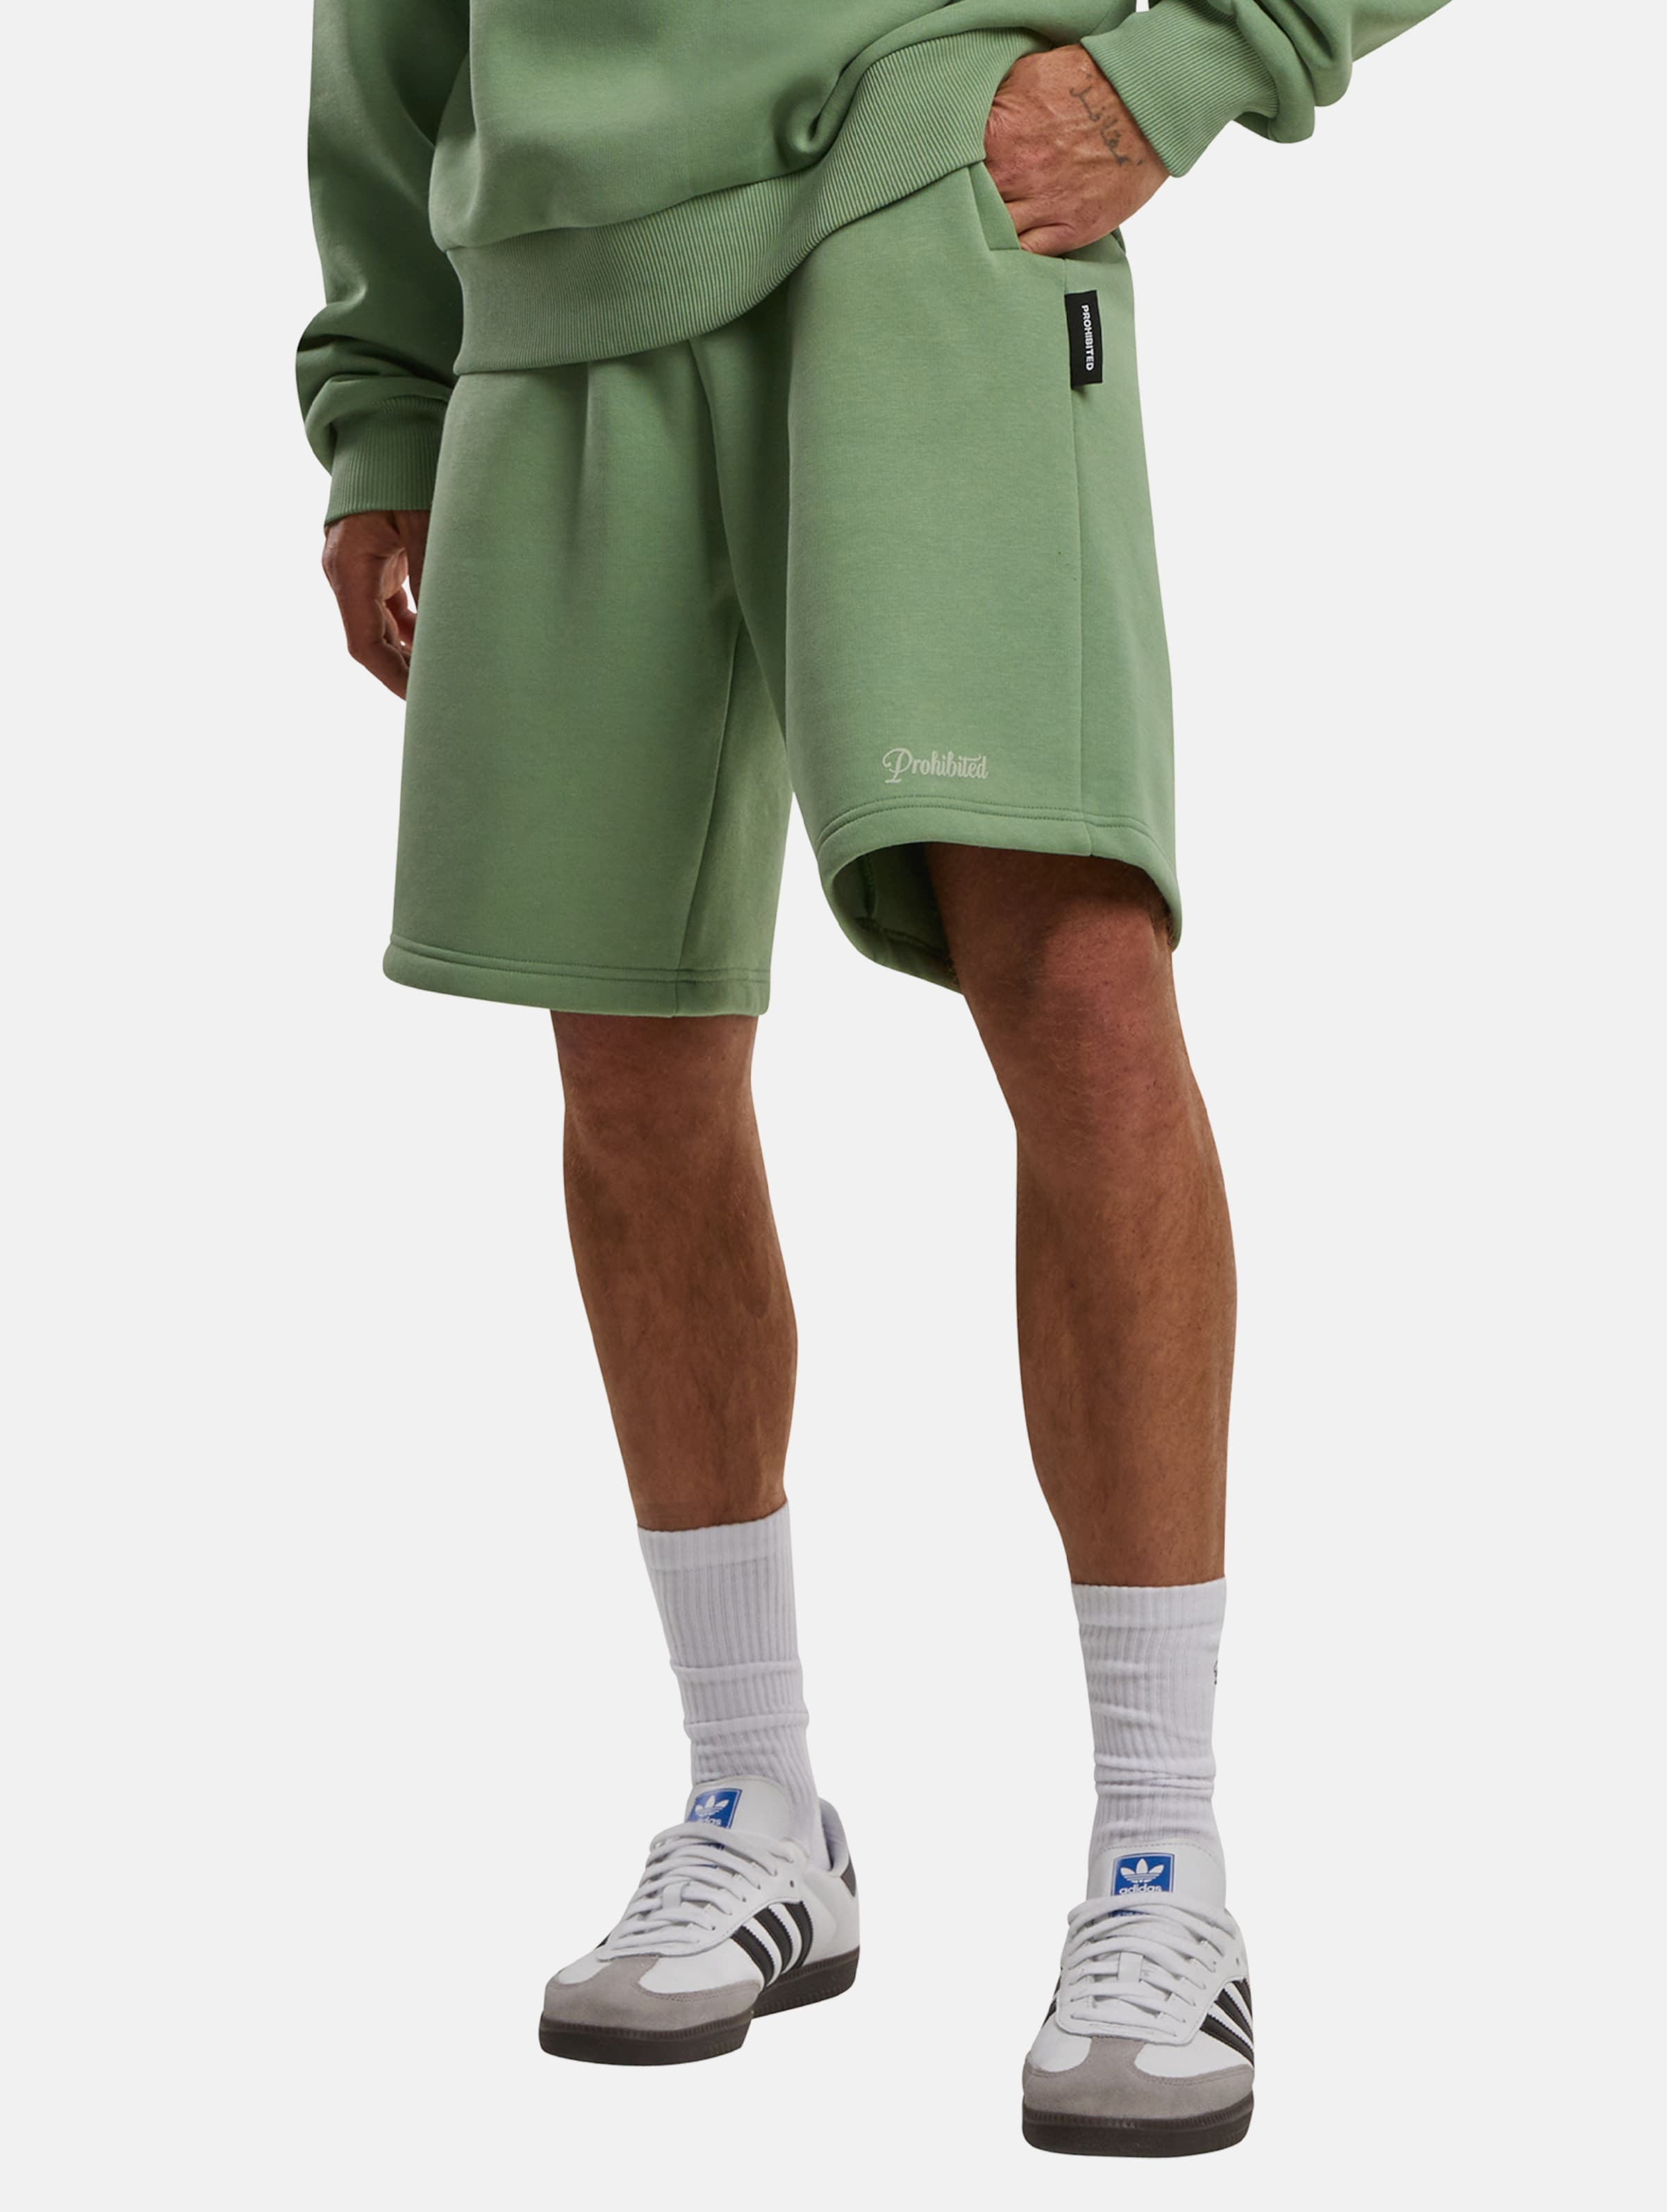 Prohibited 10119 V2 Shorts Männer,Unisex op kleur groen, Maat S